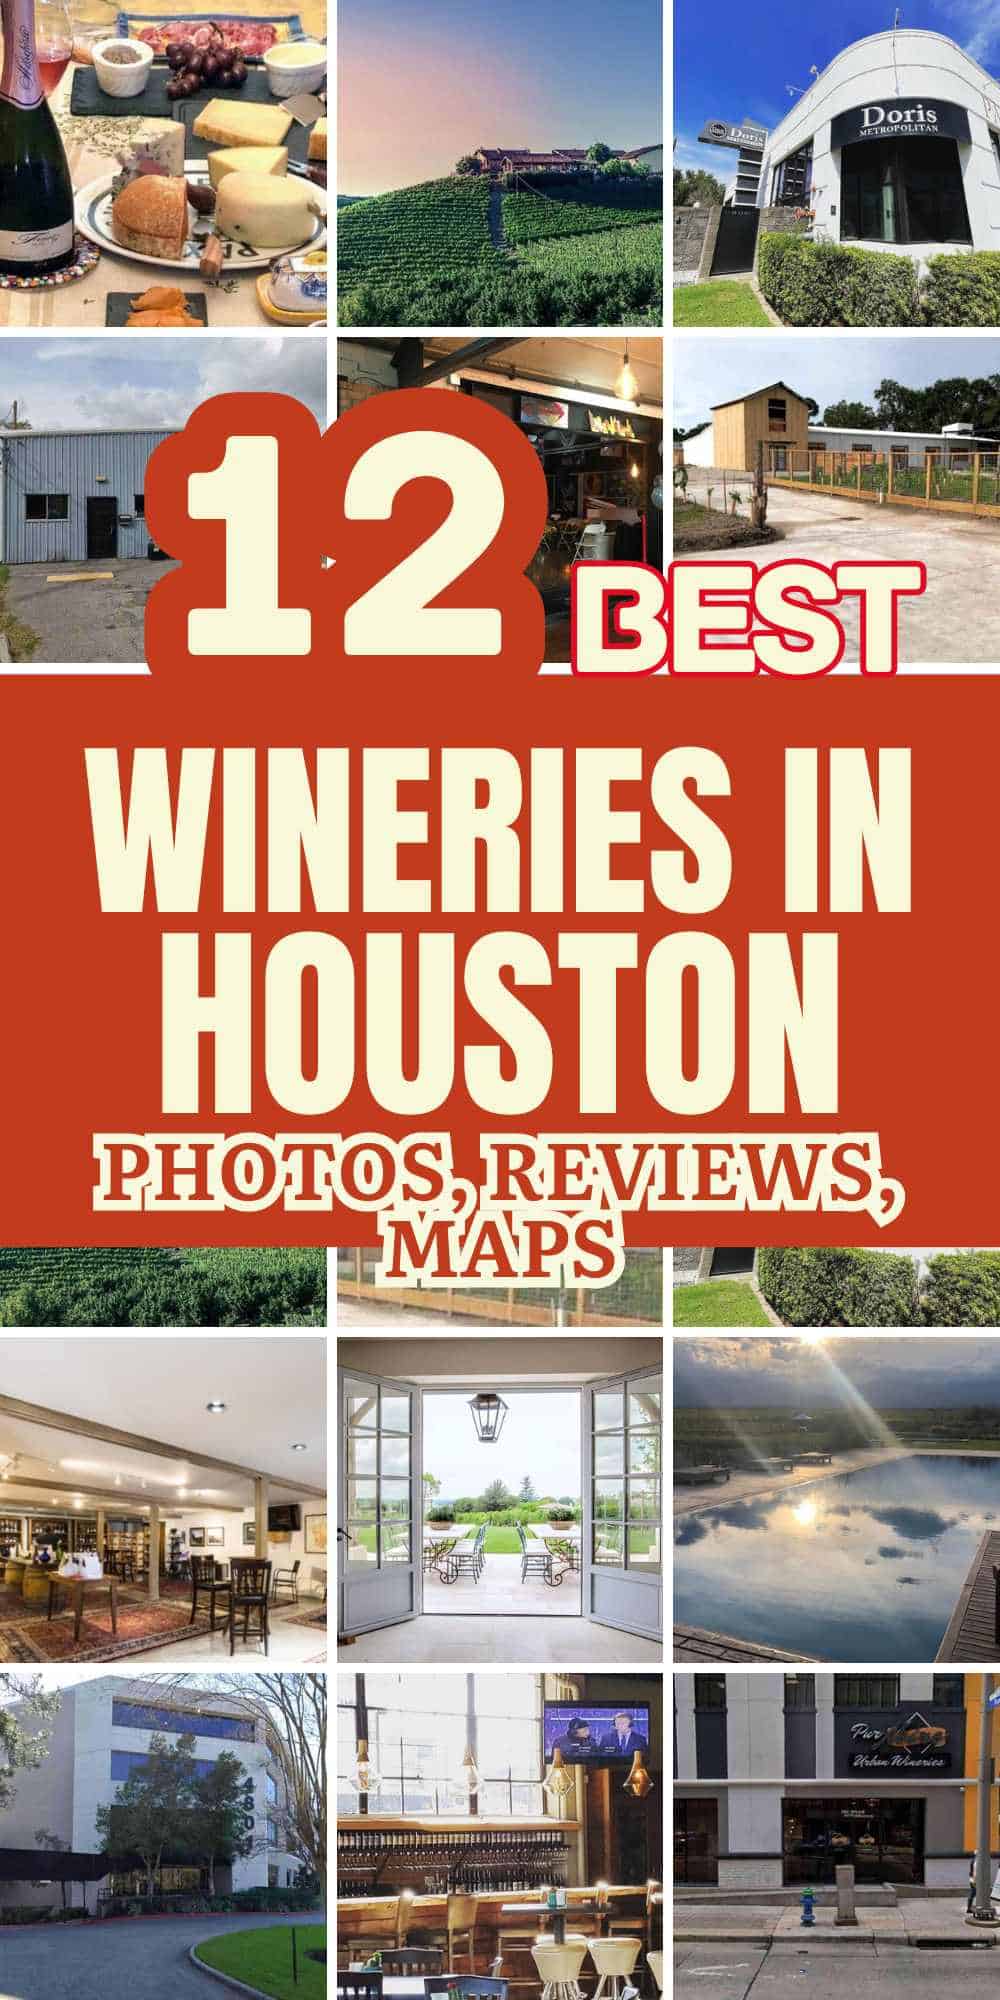 Wineries in Houston